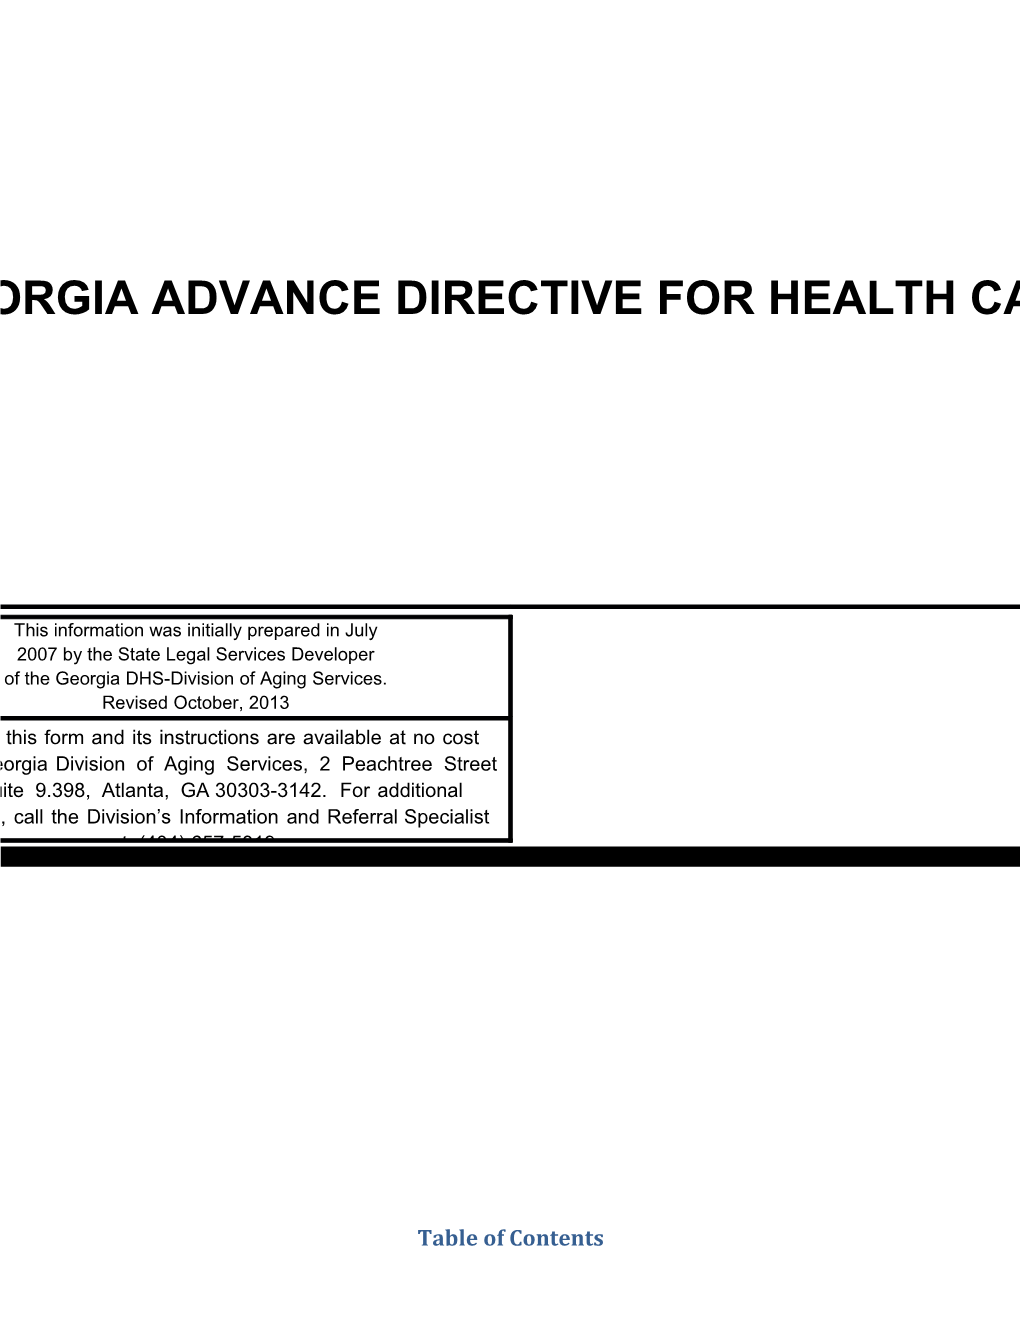 Georgia Advance Directive for Health Care-07